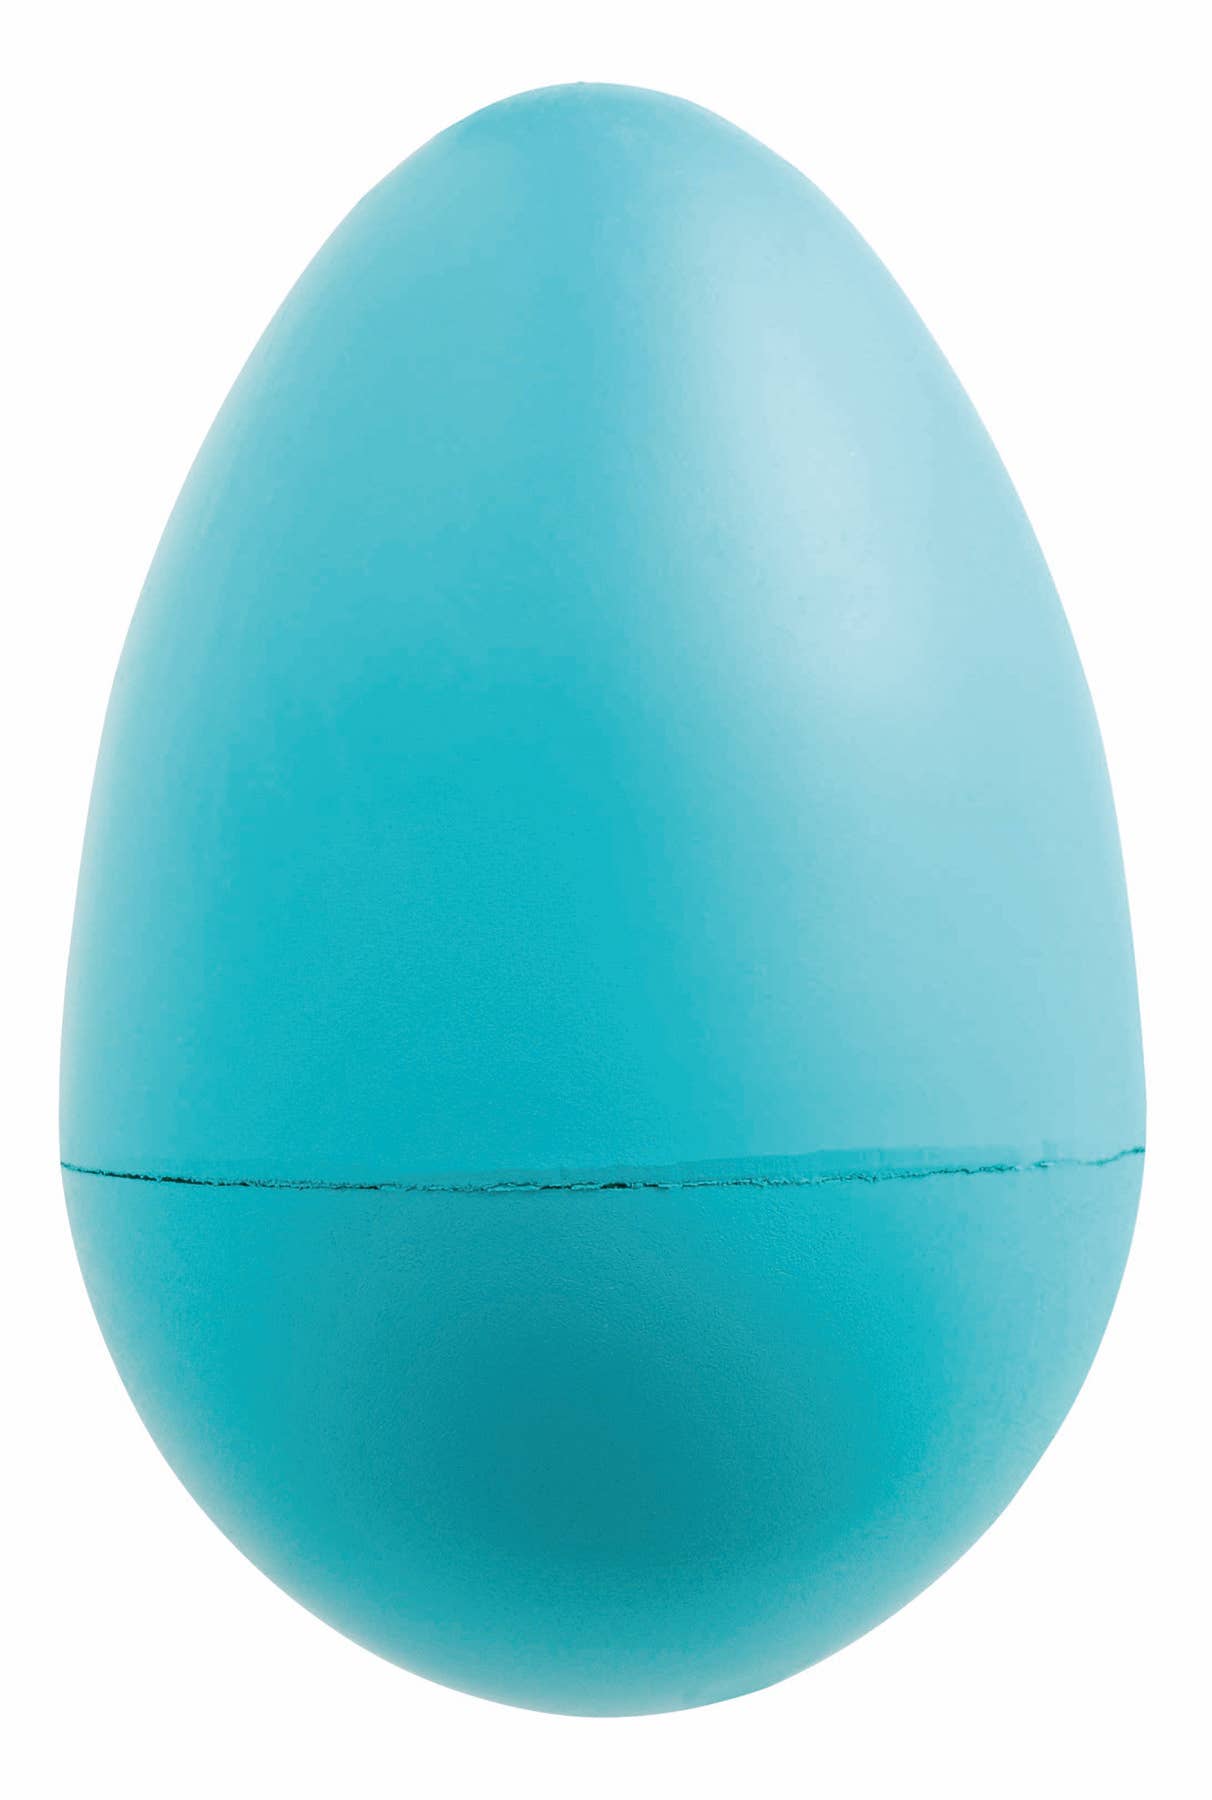 Farm Fresh Crackin Egg-Easter Toy